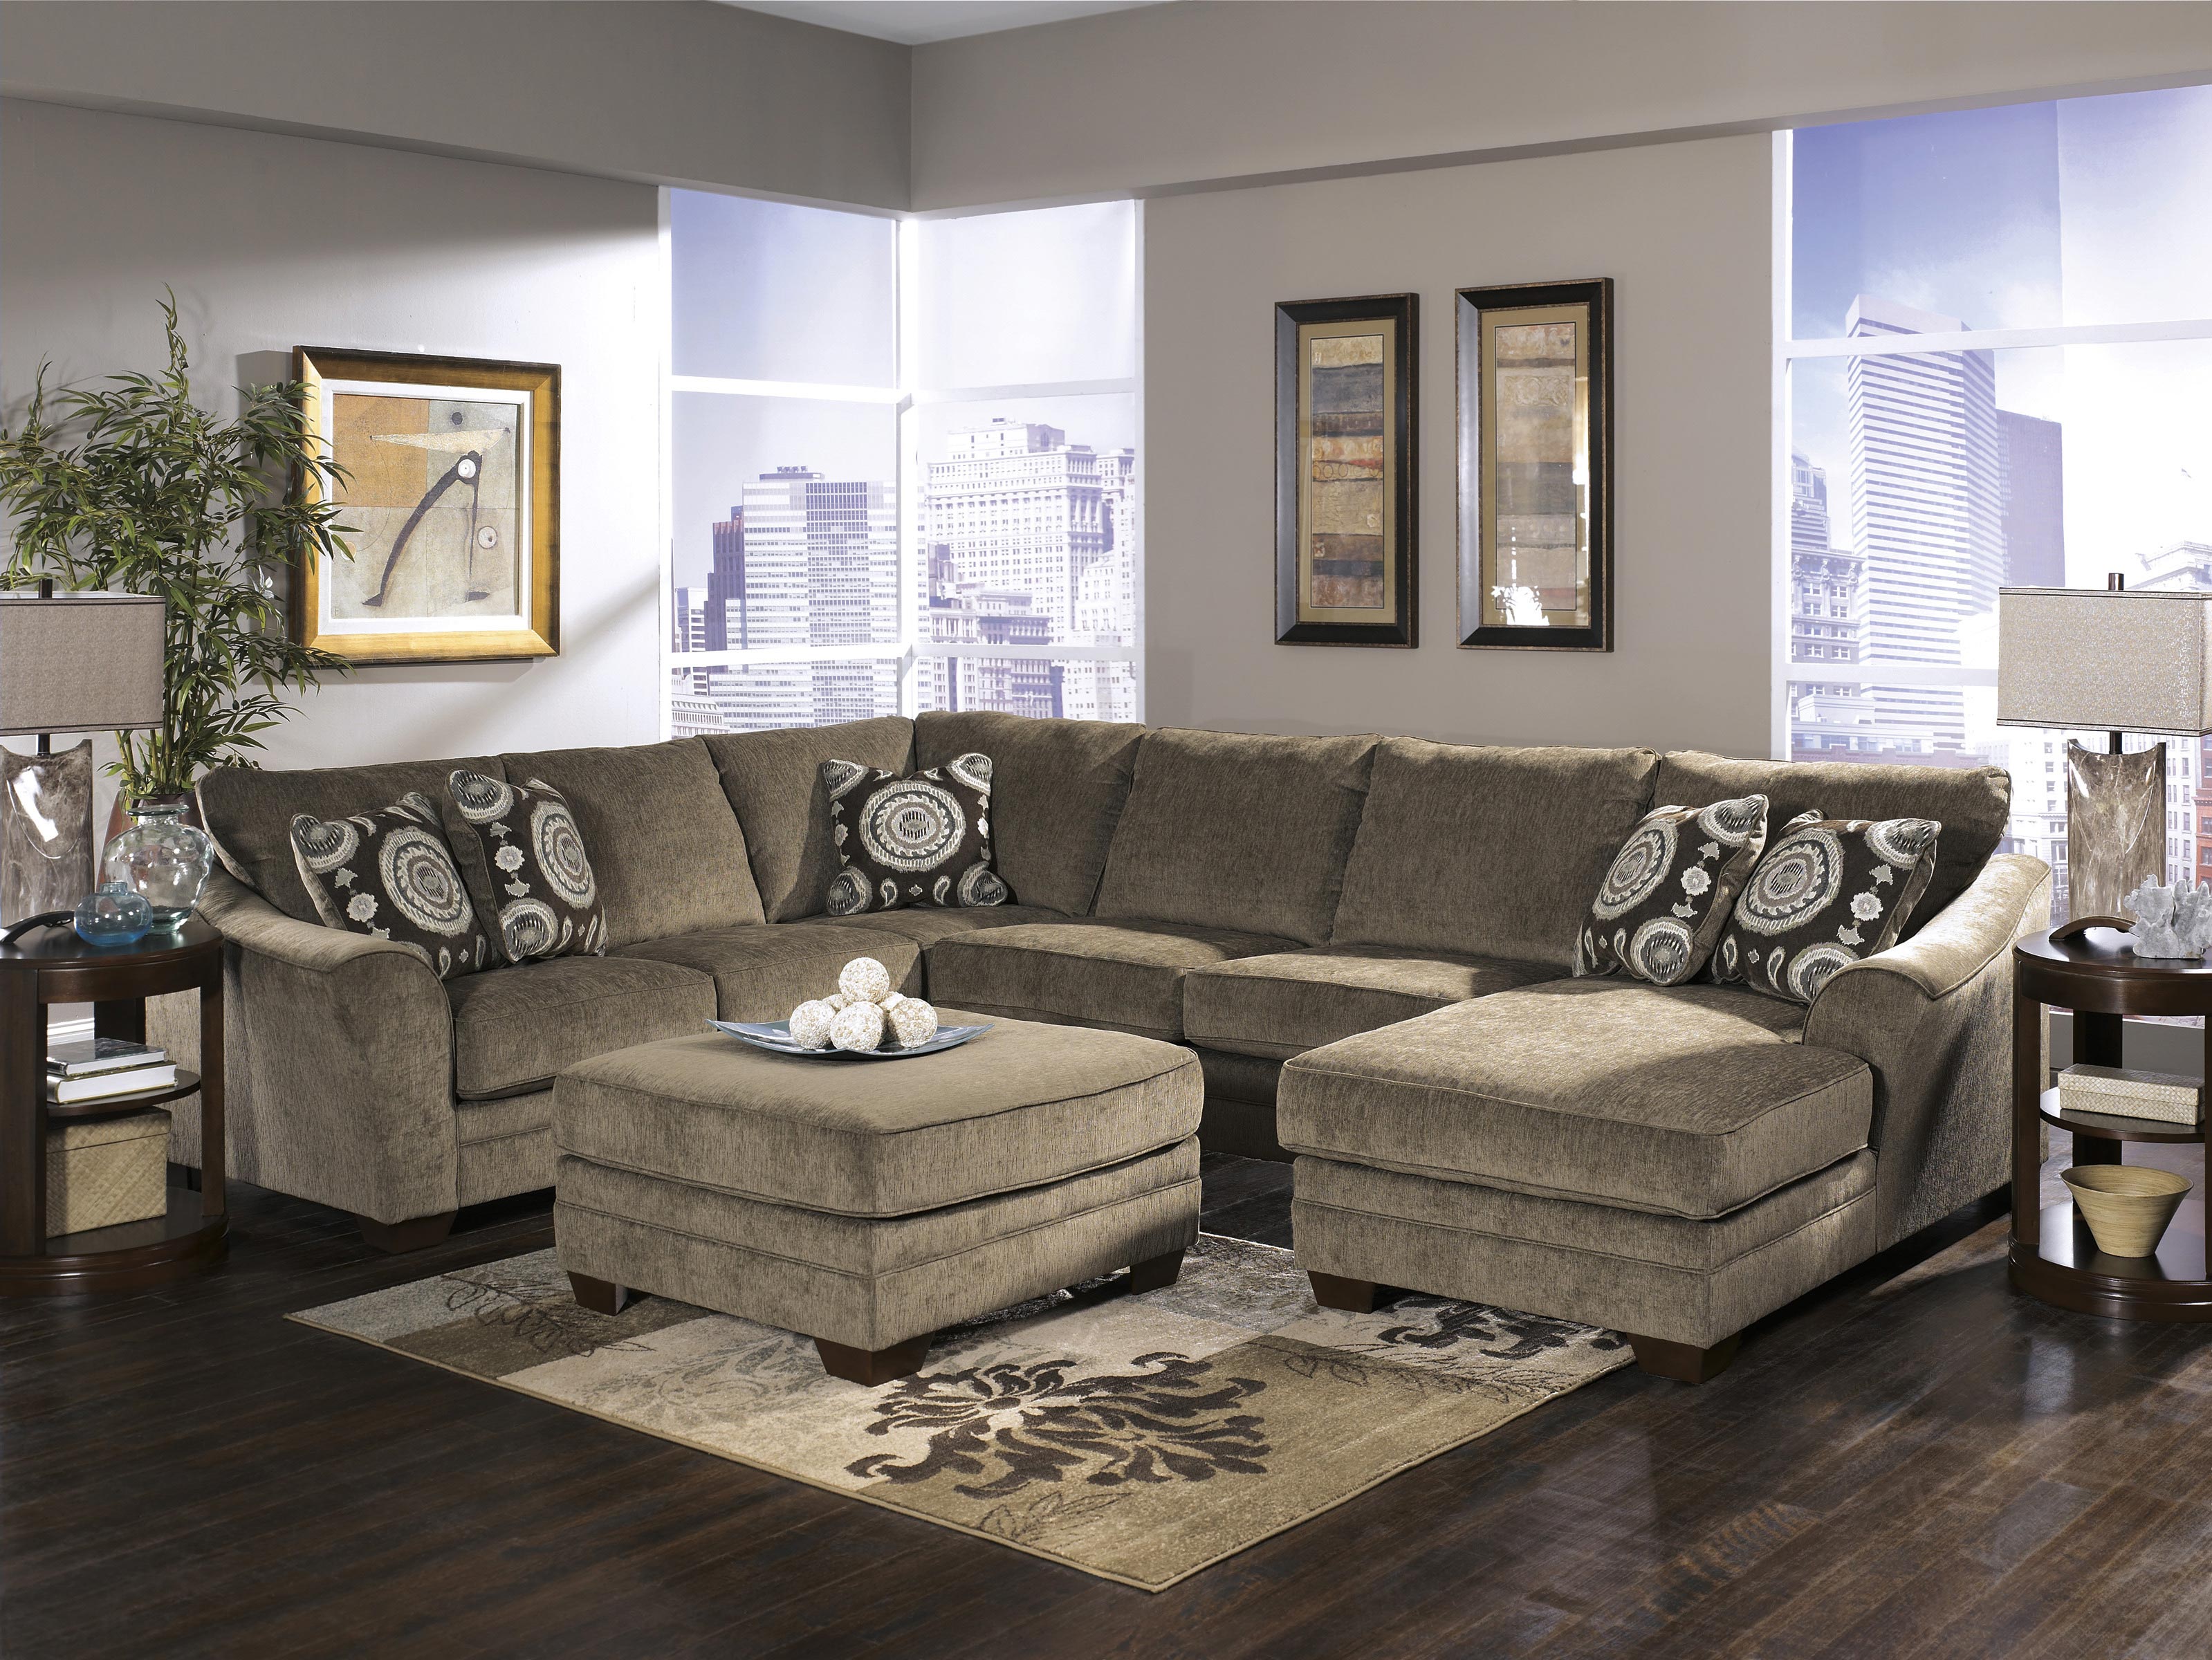 sofa layout living room